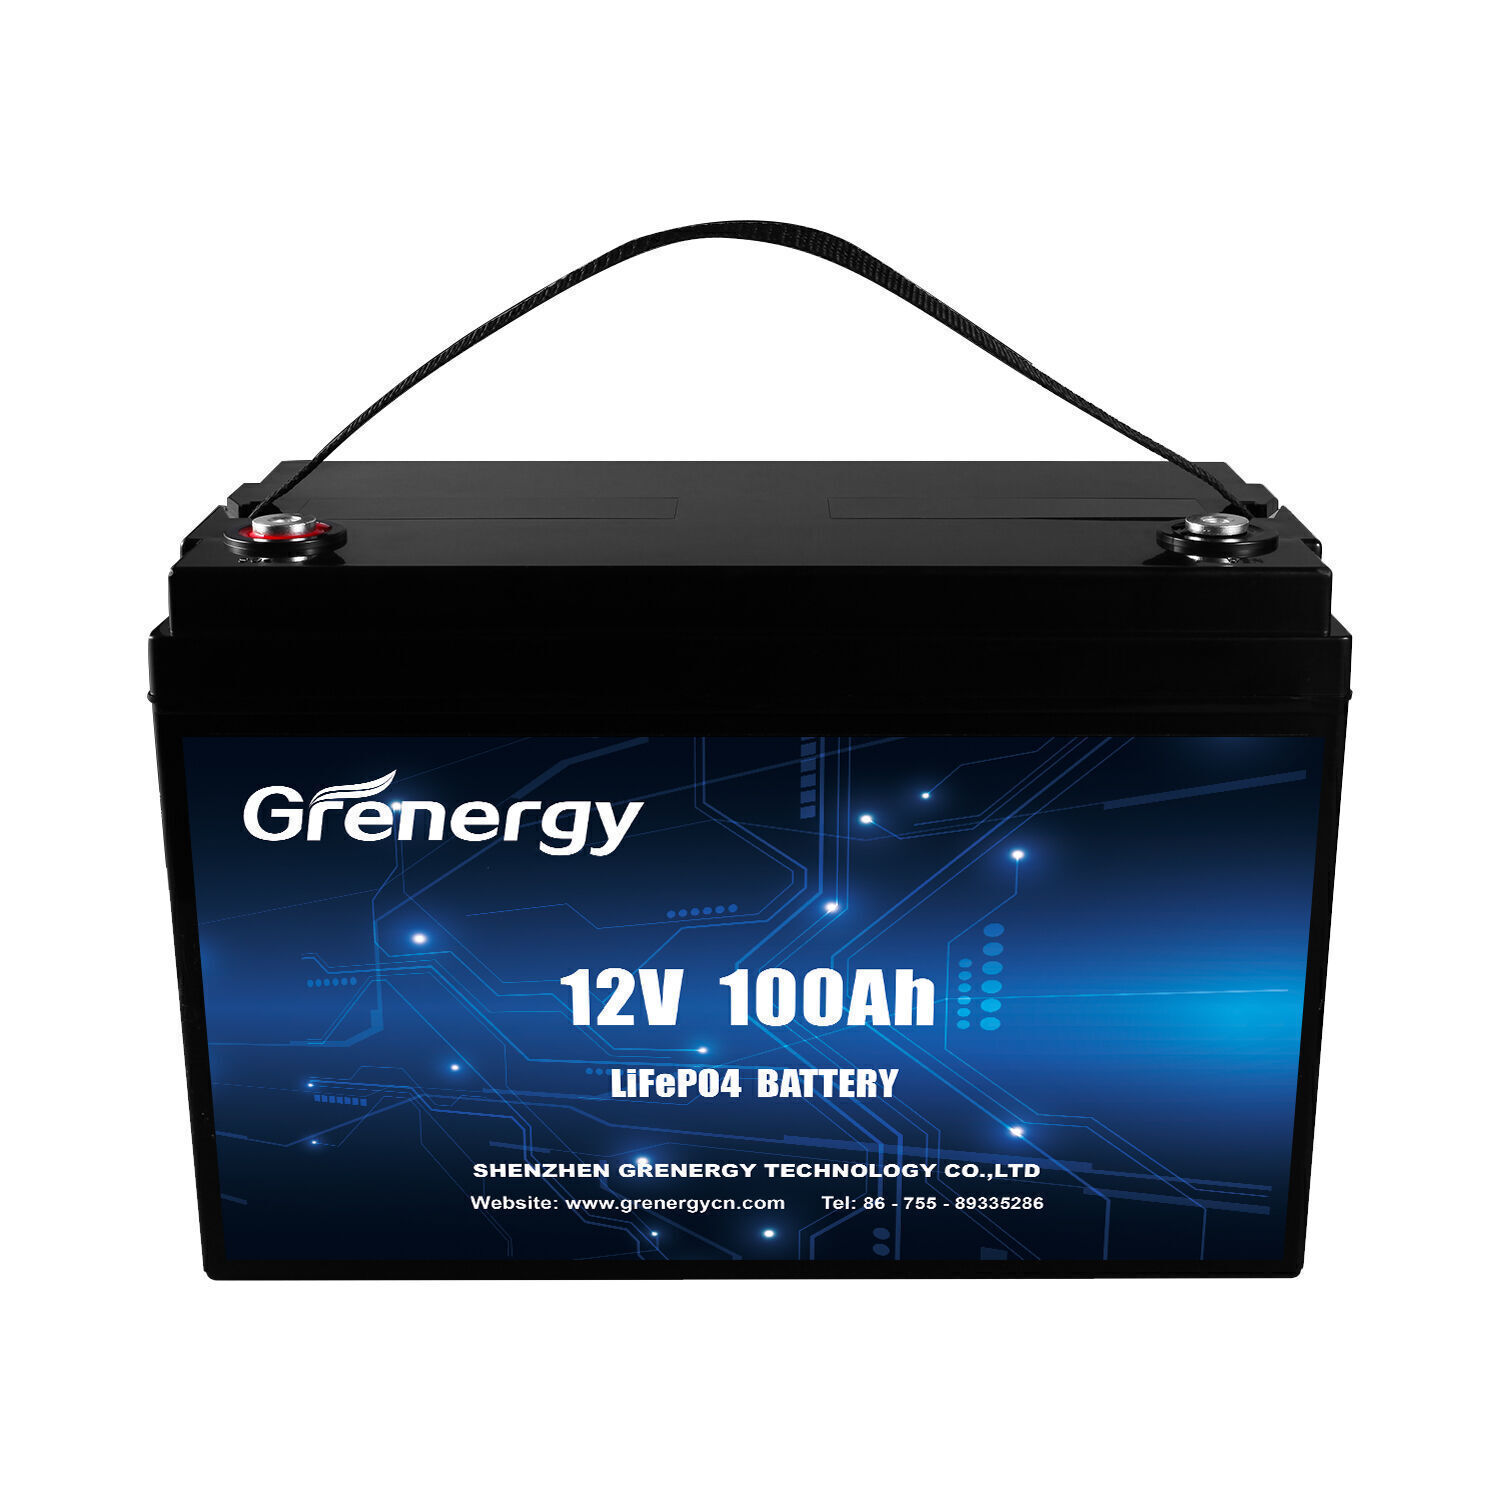 Batterie LiFePO4 100Ah 12.8V pour camping-car caravane camping